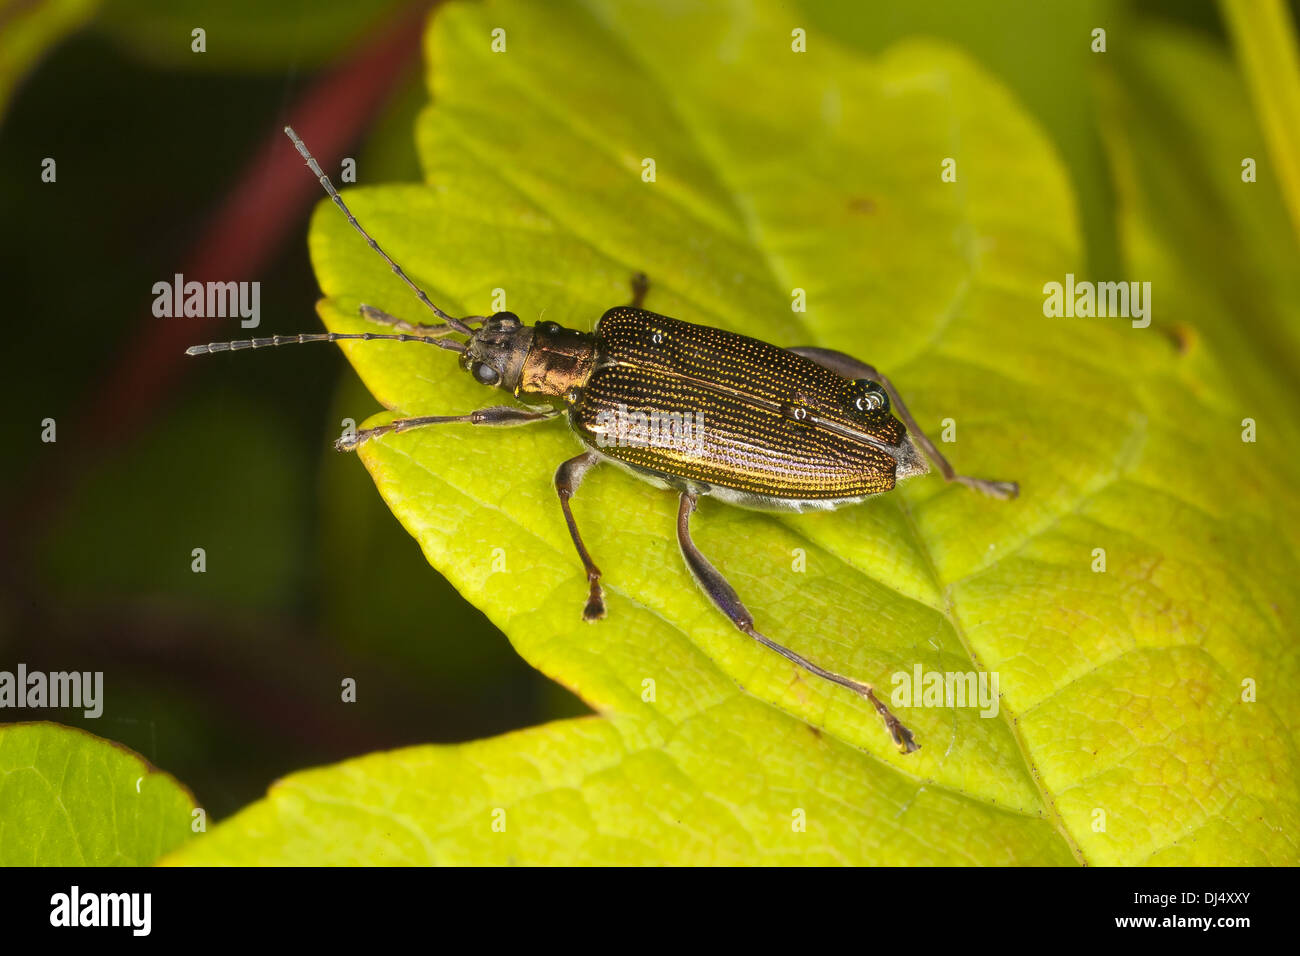 Donacia simplex, Chrysomelid beetle Stock Photo